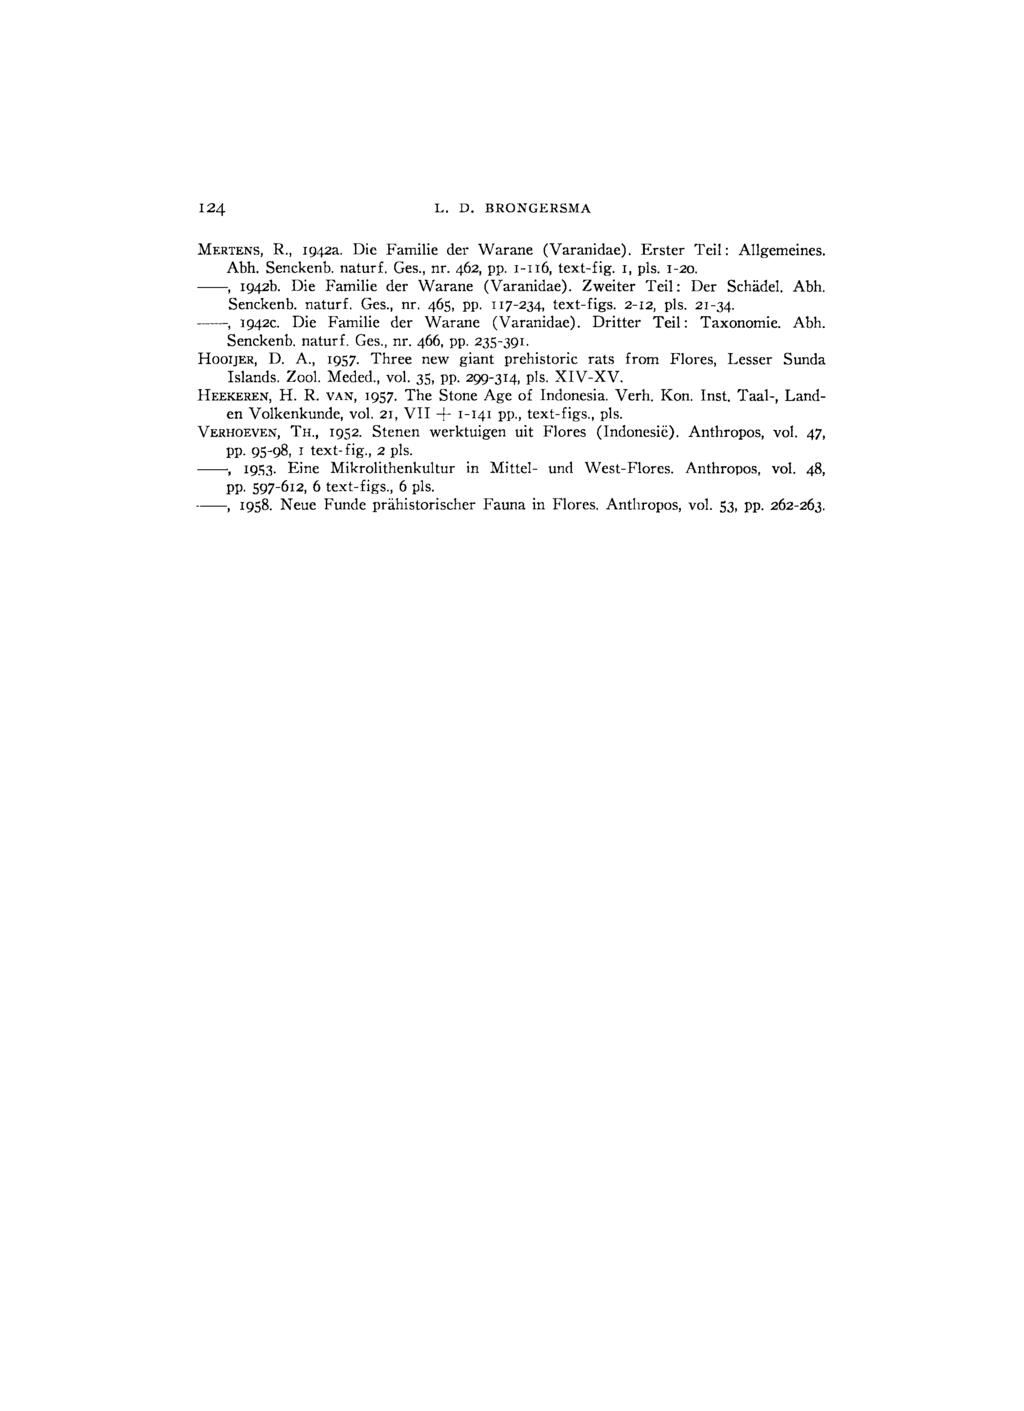 124 L. D. BRONGERSMA MERTENS, R., 1942a. Die Familie der Warane (Varanidae). Erster Teil: Allgemeines. Abh. Senckenb. naturf. Ges., nr. 462, pp. 1-116, text-fig. 1, pis. 1-20., 1942b.